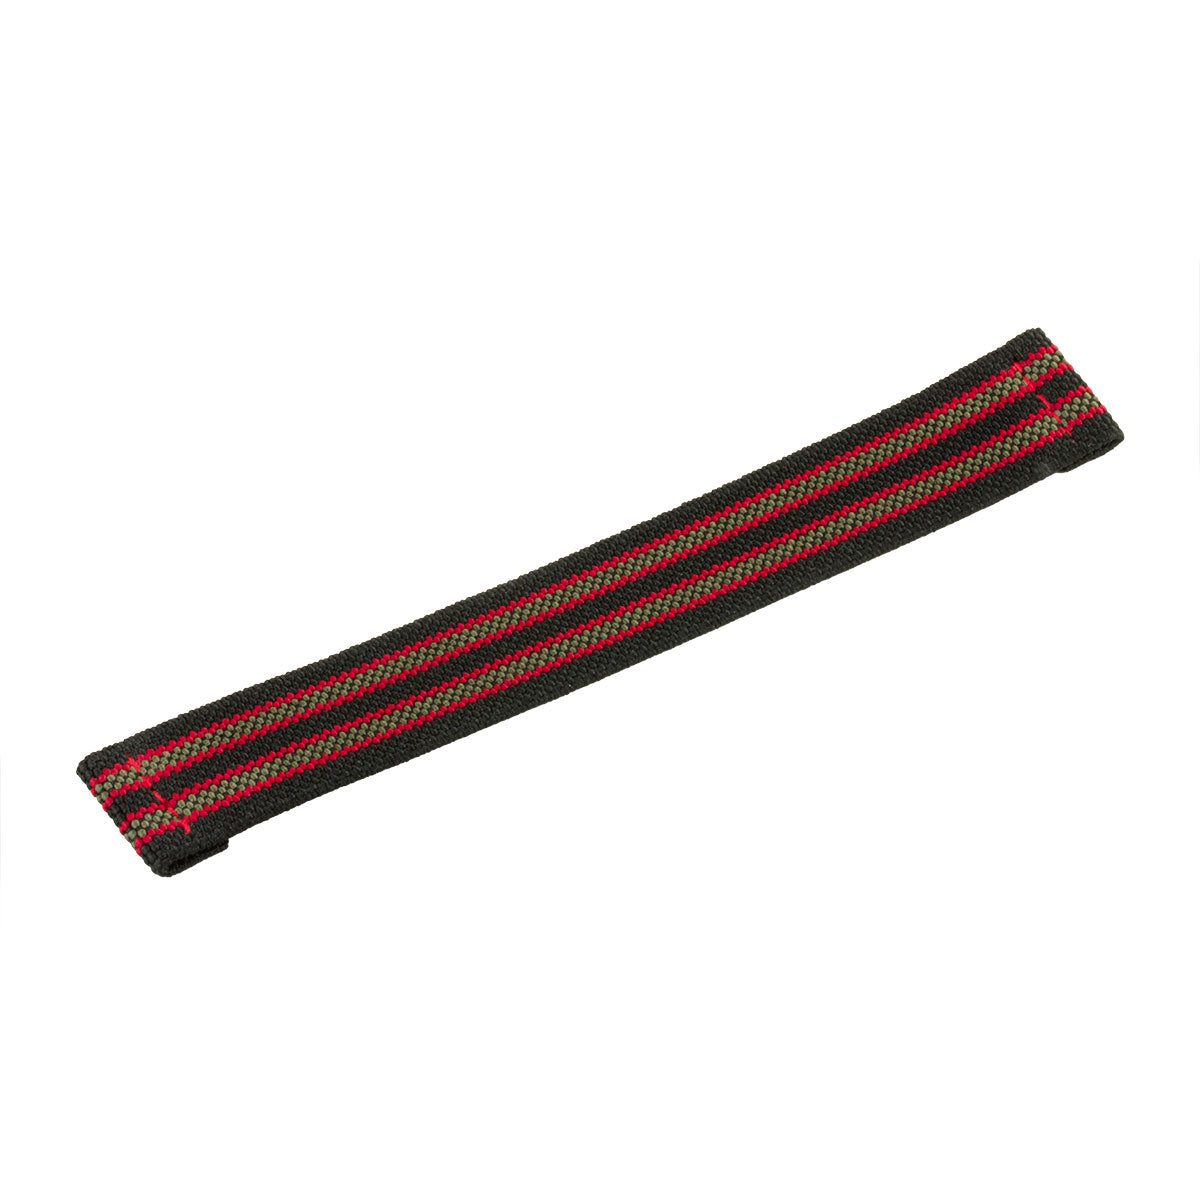 bracelet sean connery noir kaki rouge black kaki and red strap